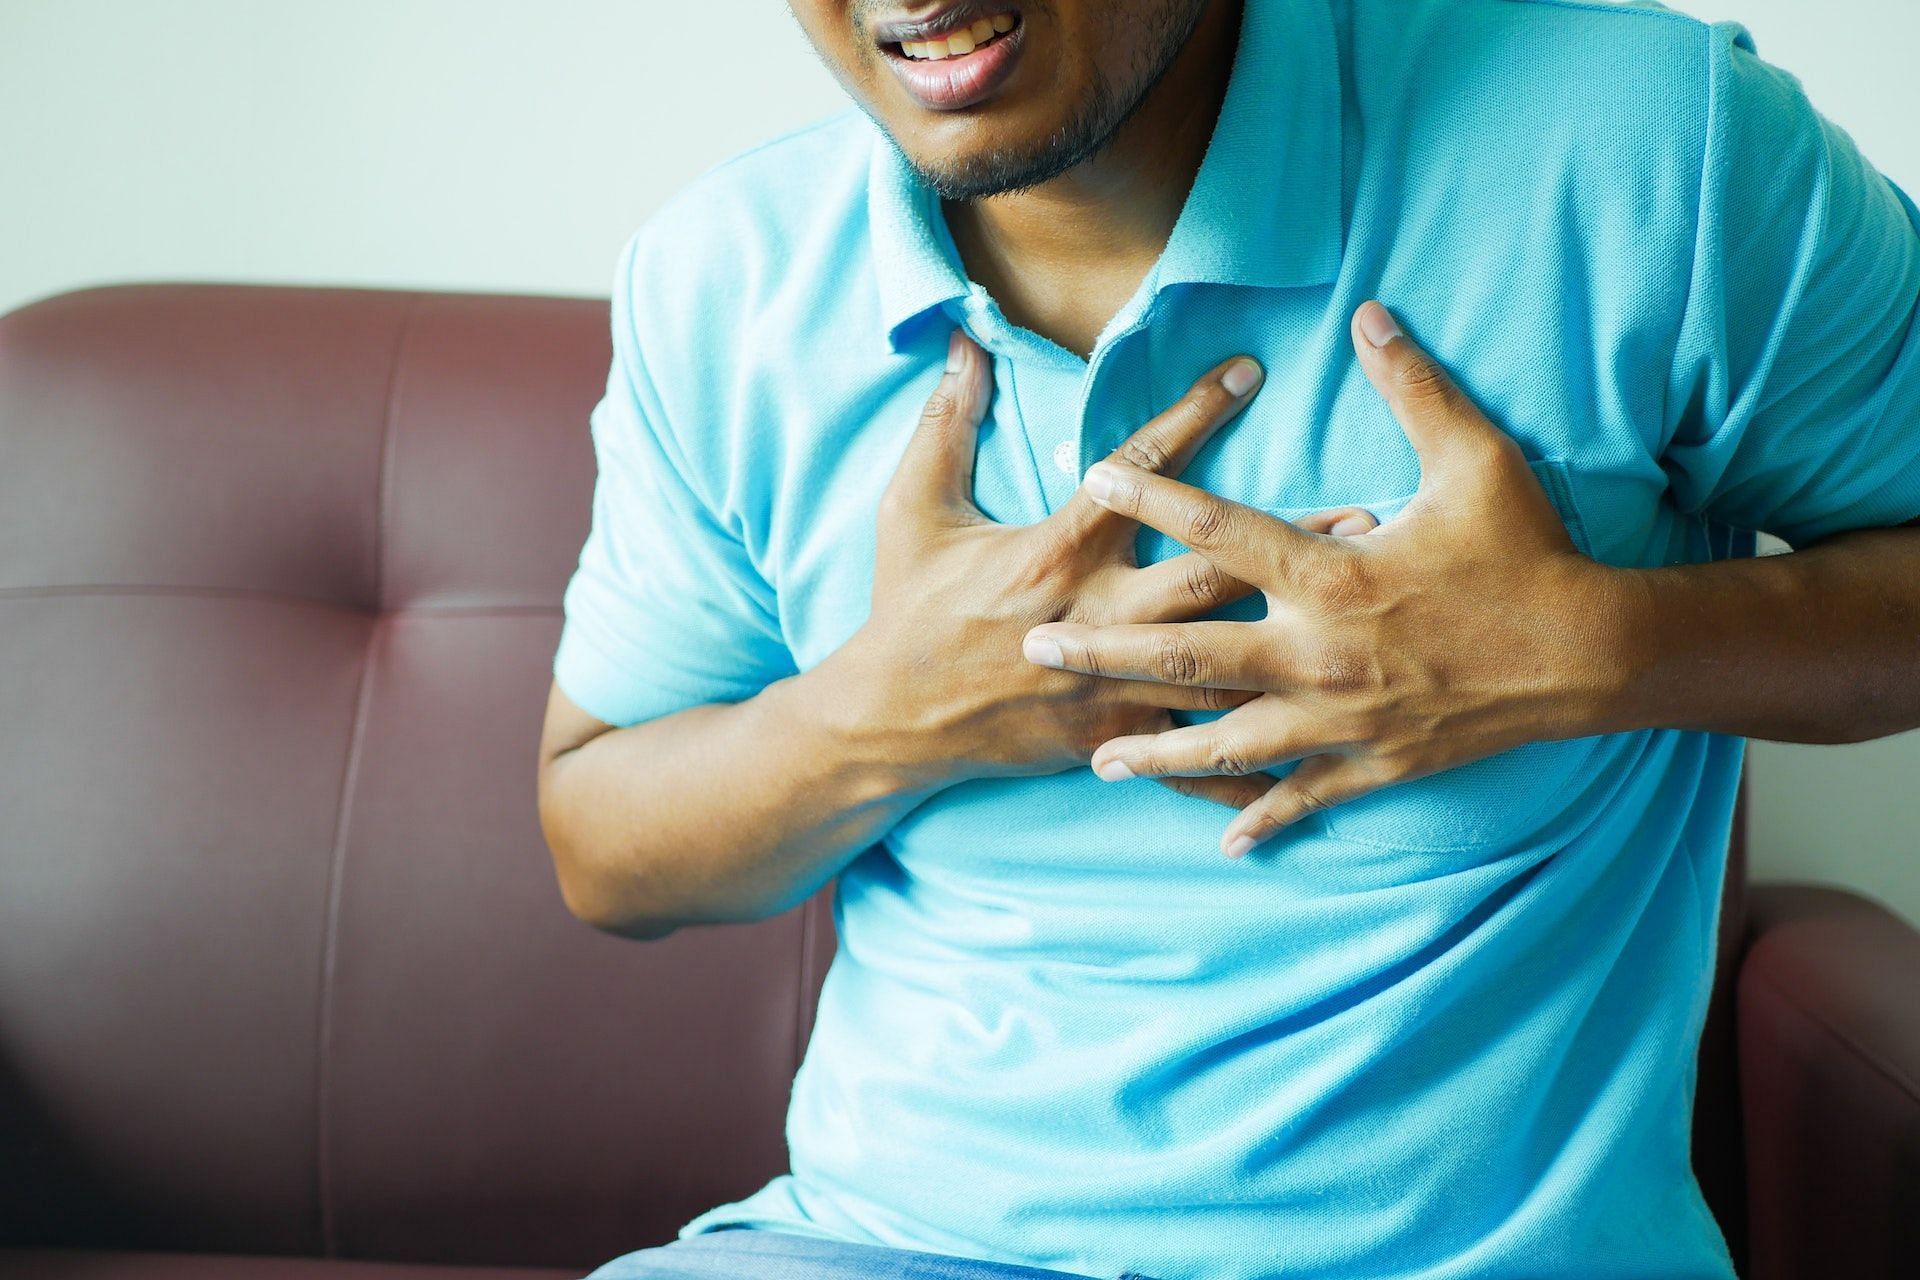 Symptoms of high blood pressure can include chest pain, headaches. (Image via Pexels/Towfiqu barbhuiya)